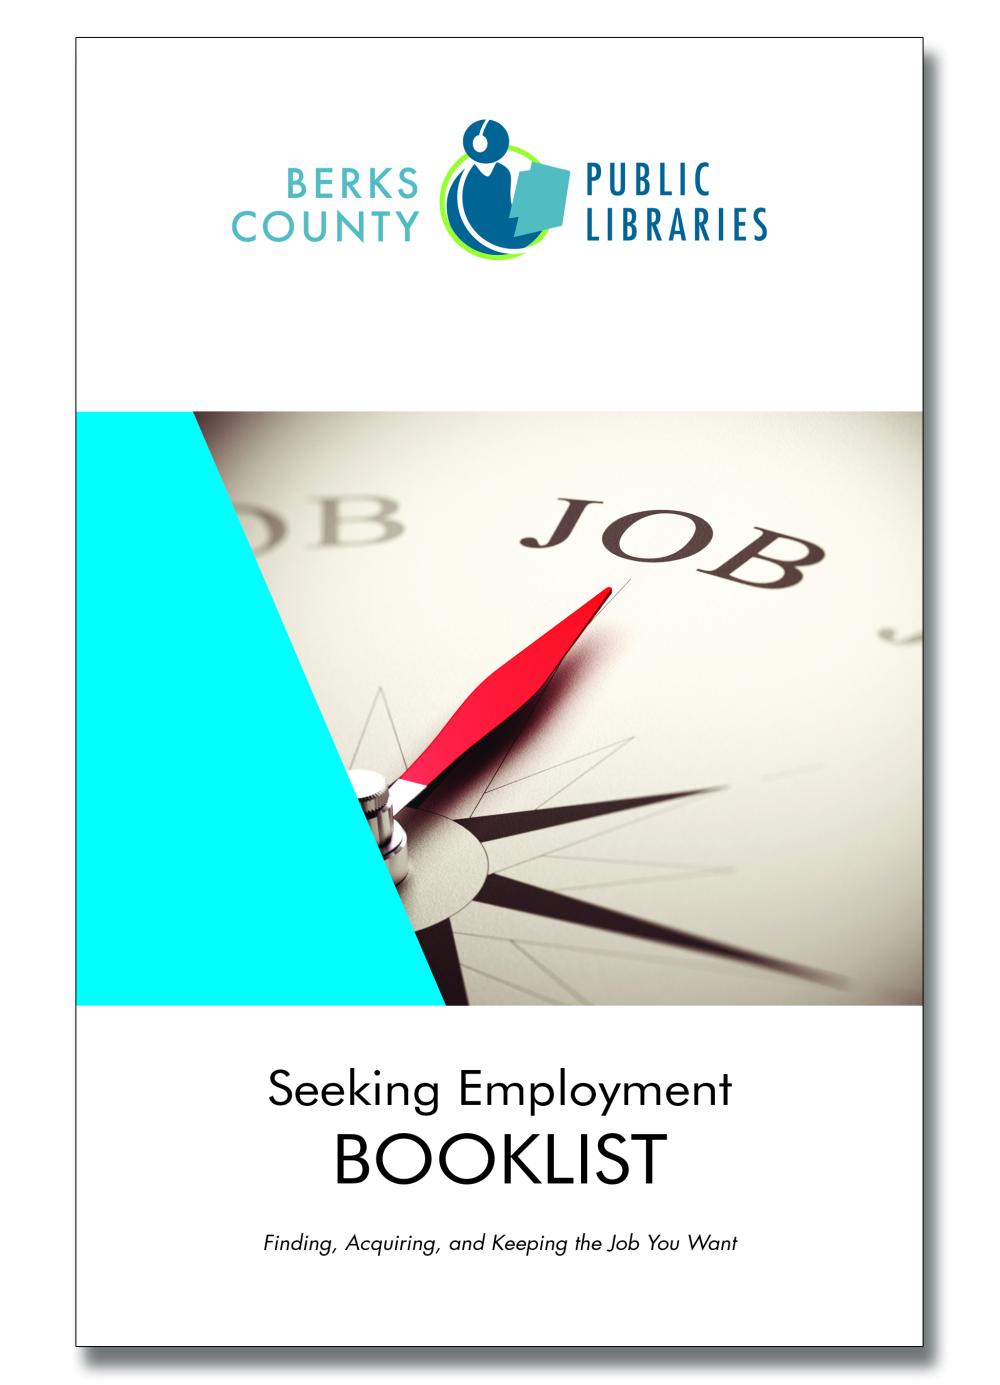 Seeking Employment Booklist